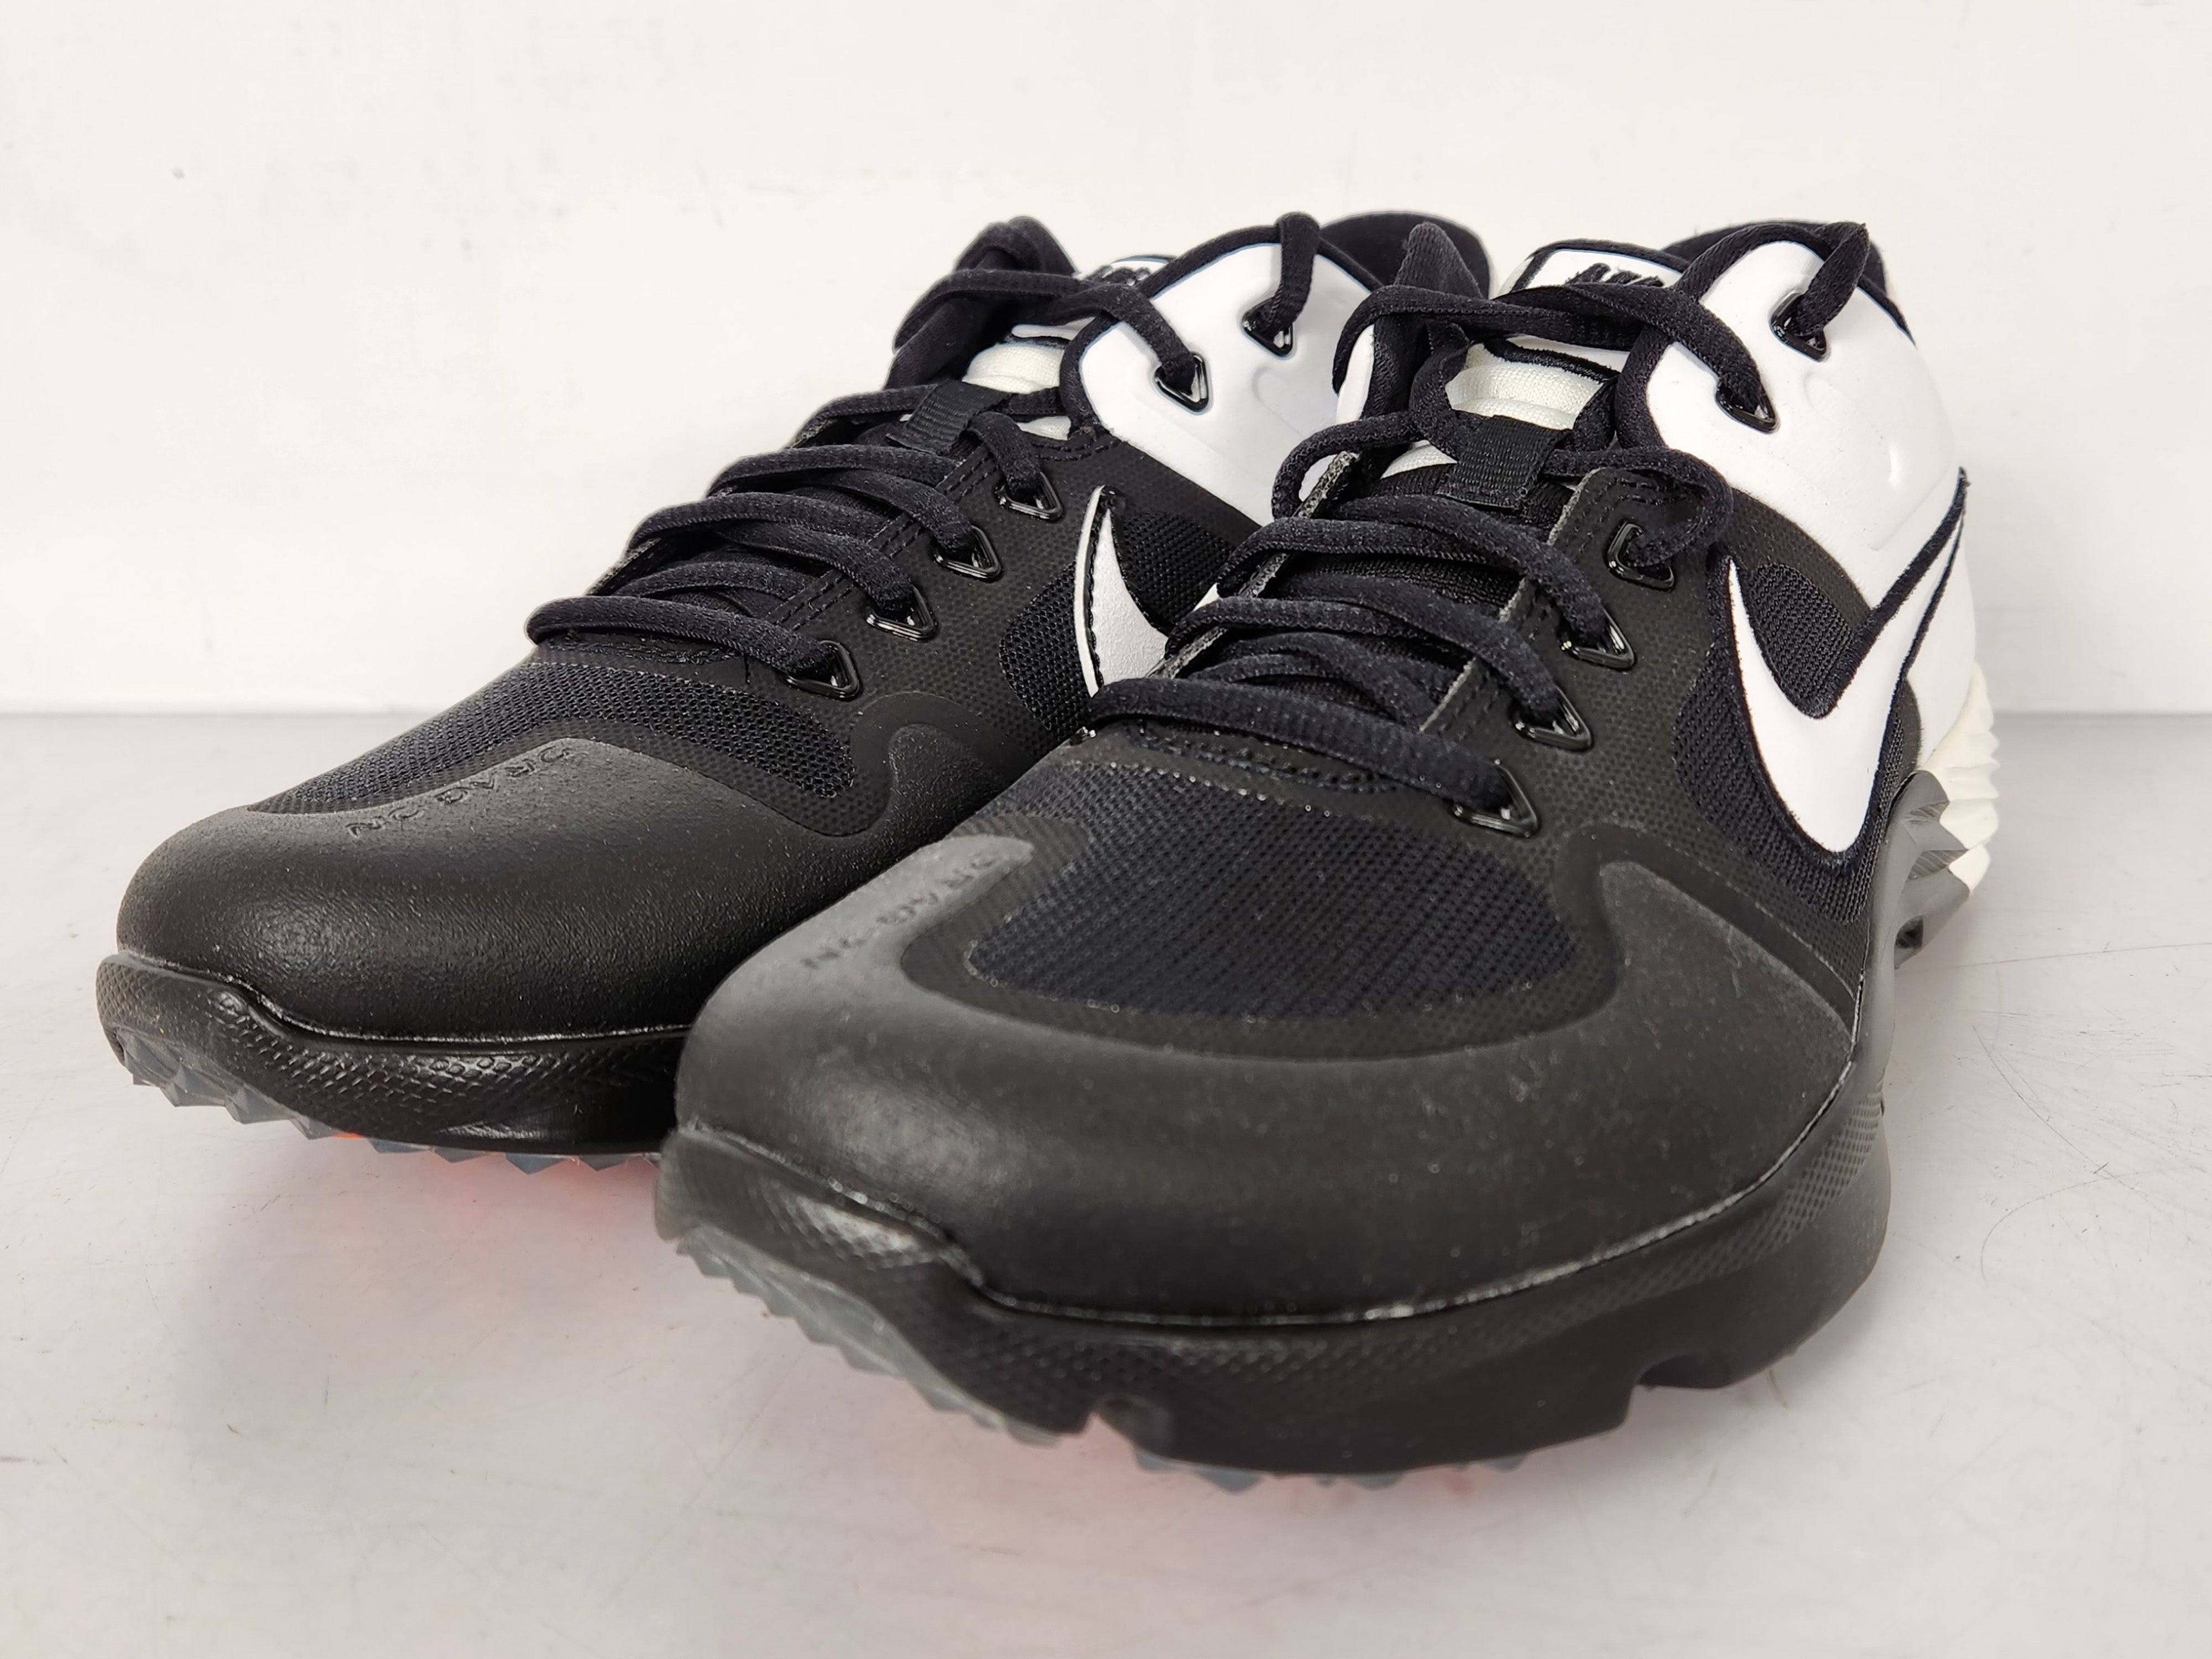 Nike Black/White Alpha Huarache Elite 2 Turf Baseball Shoes Men's Size 7.5 / Women's Size 9